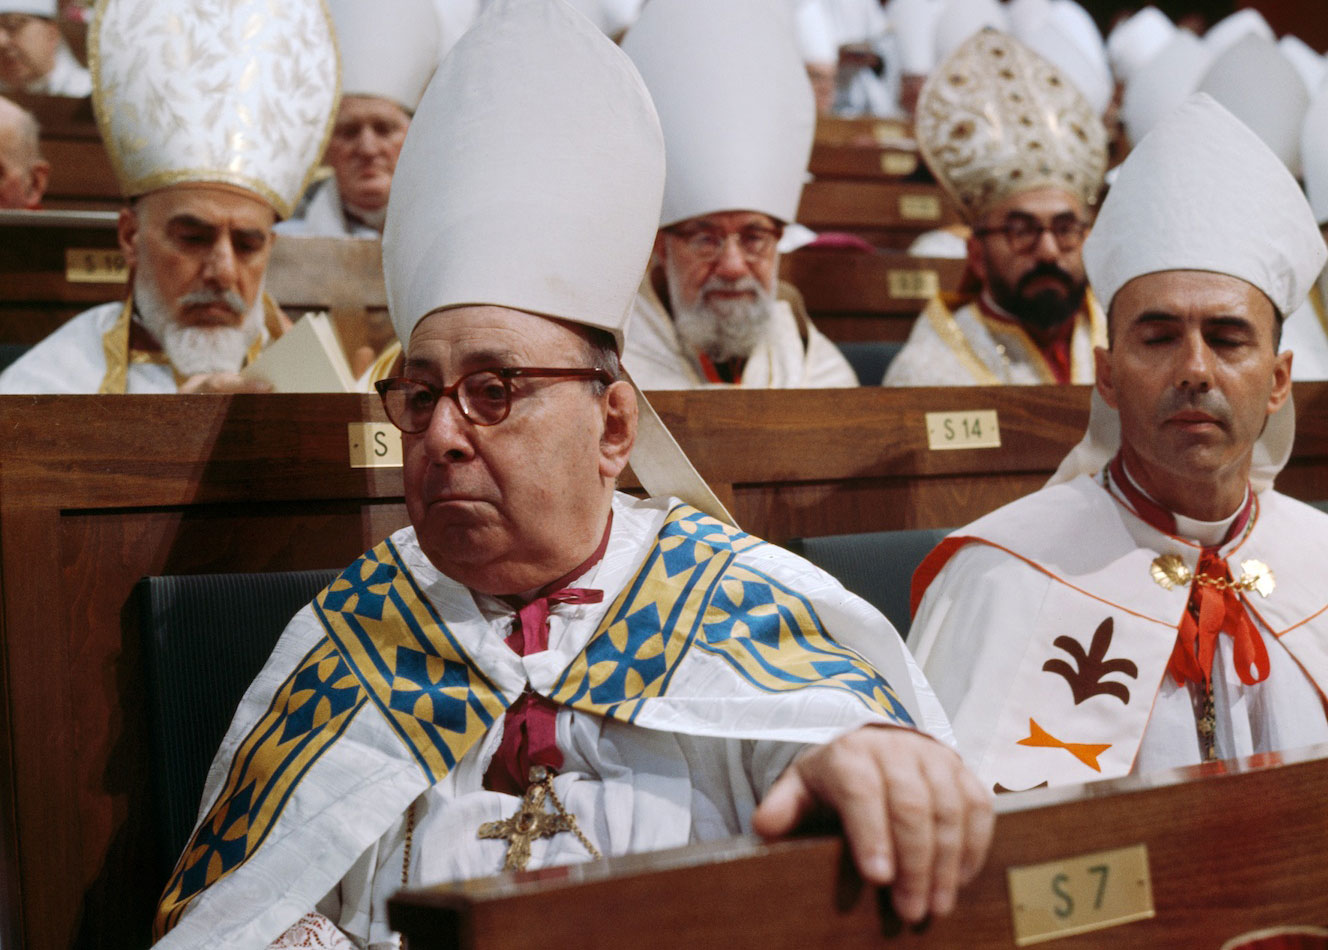 A Doutrina Social no Concílio Vaticano II – parte 4